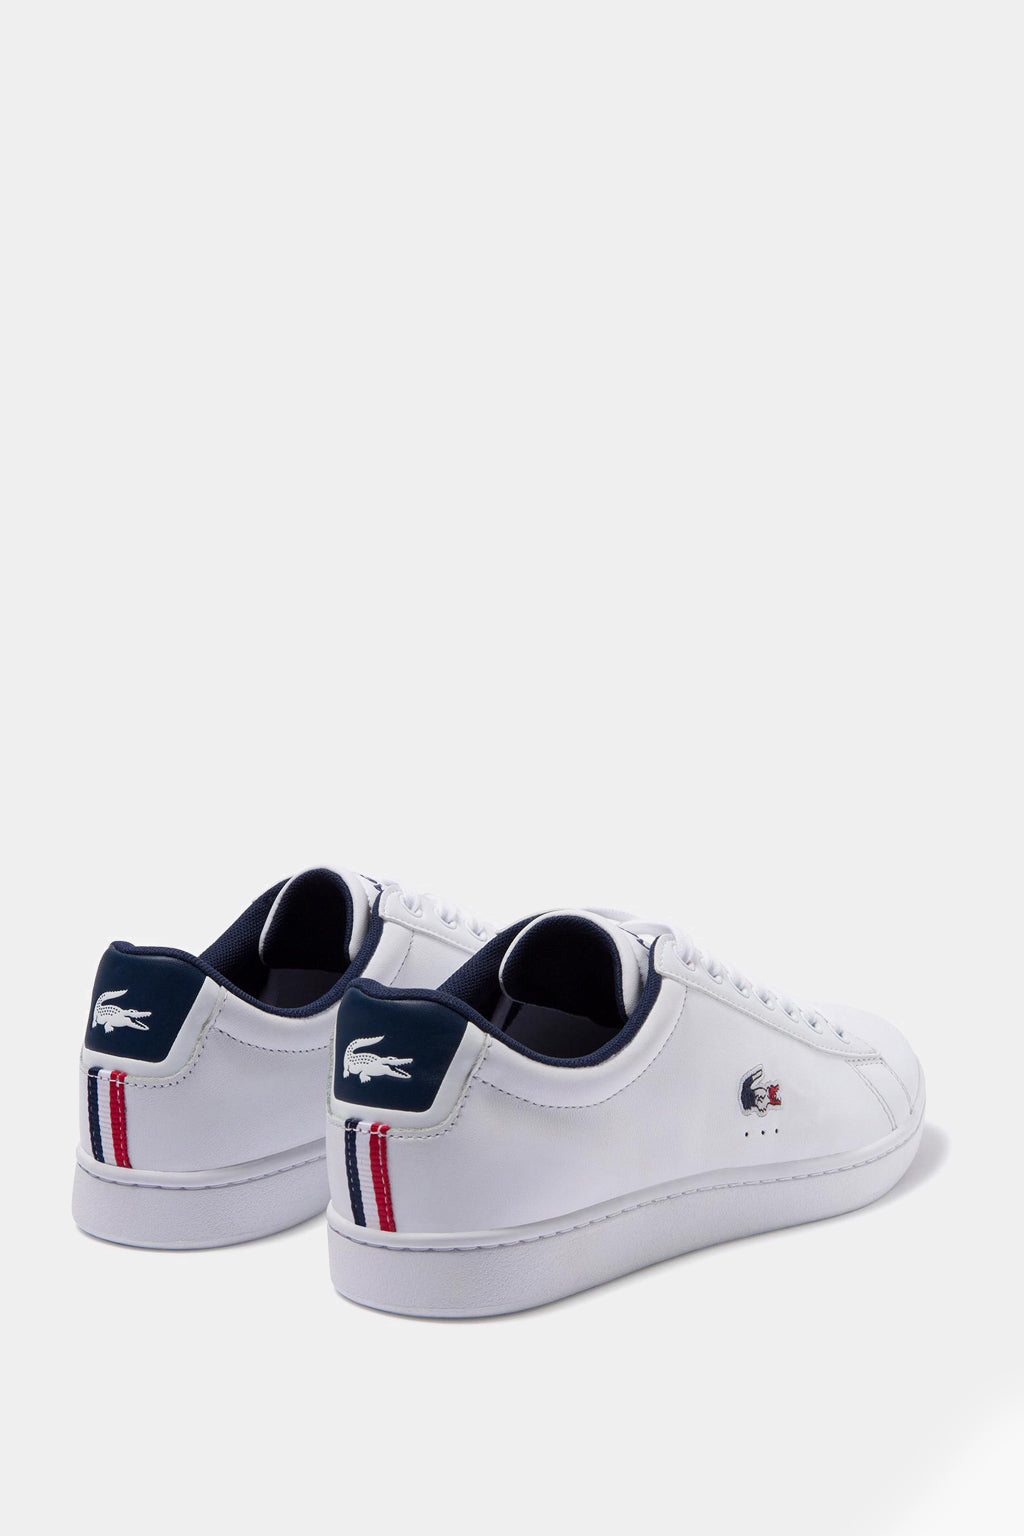 Lacoste - Lacoste Carnaby Evo Tri 1 Men's Sneakers